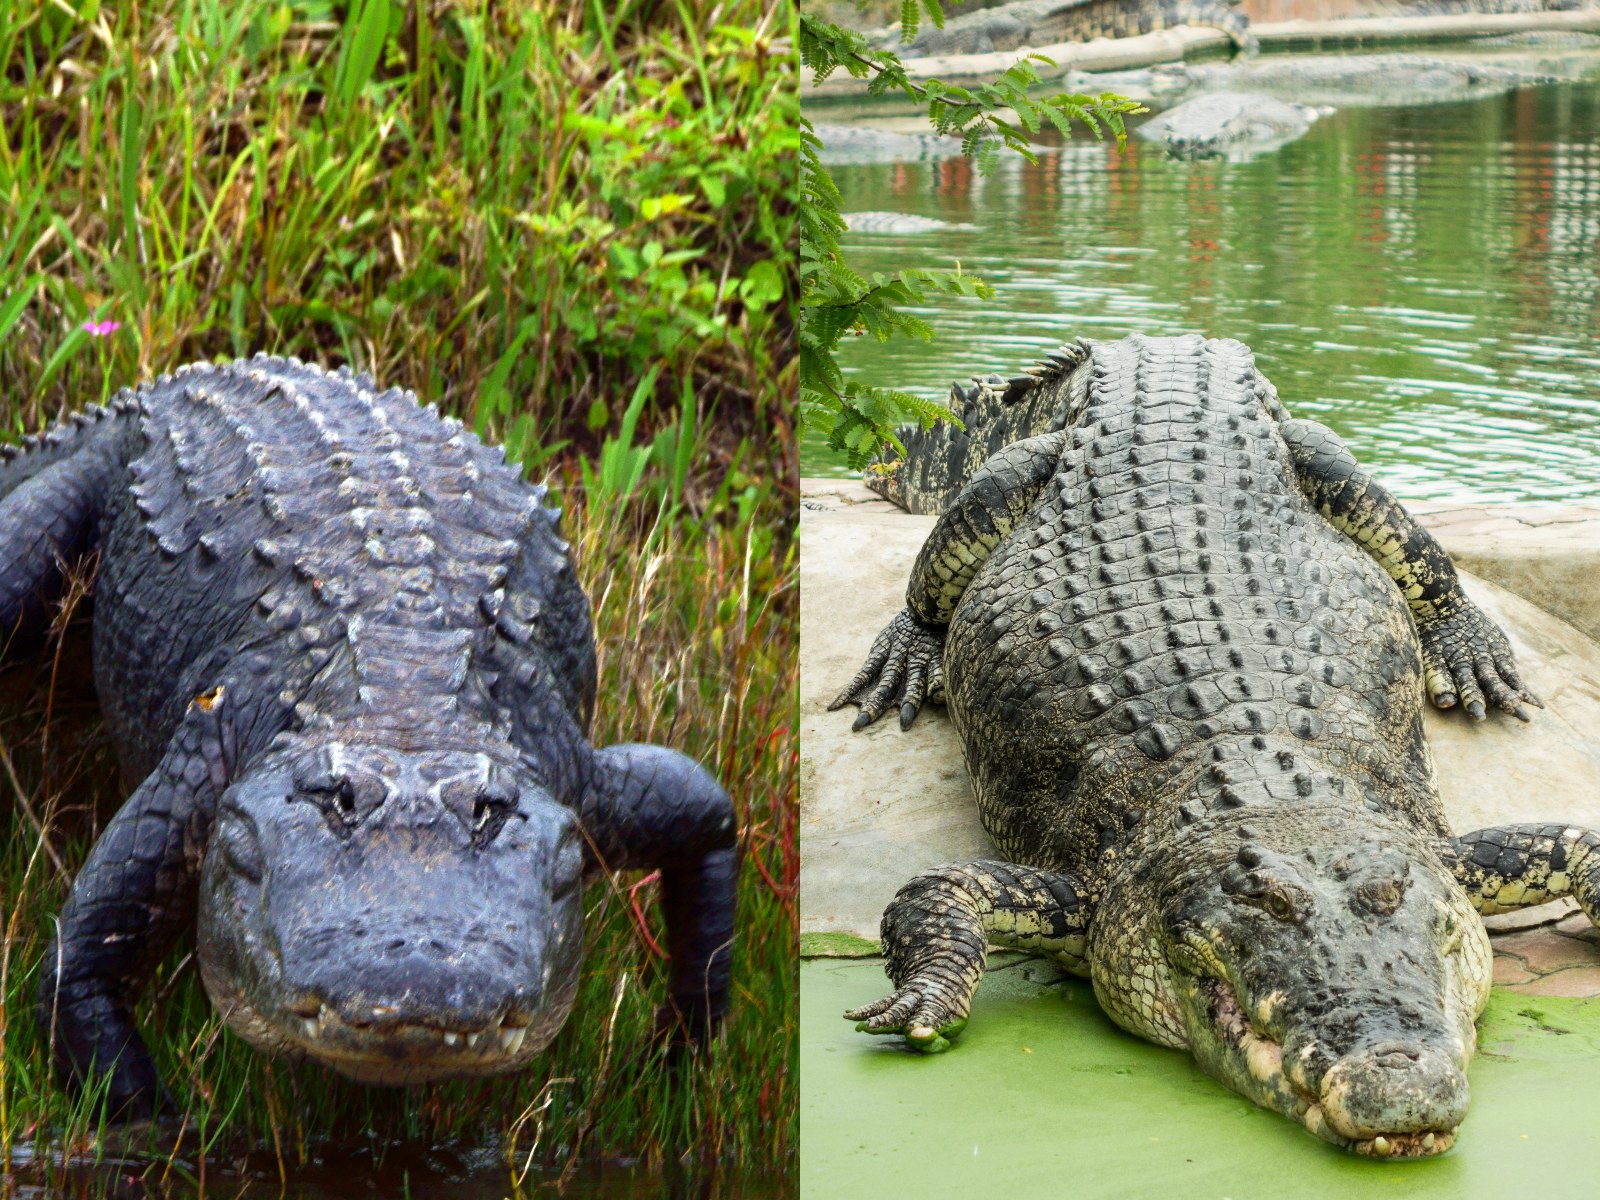 saltwater crocodile size comparison